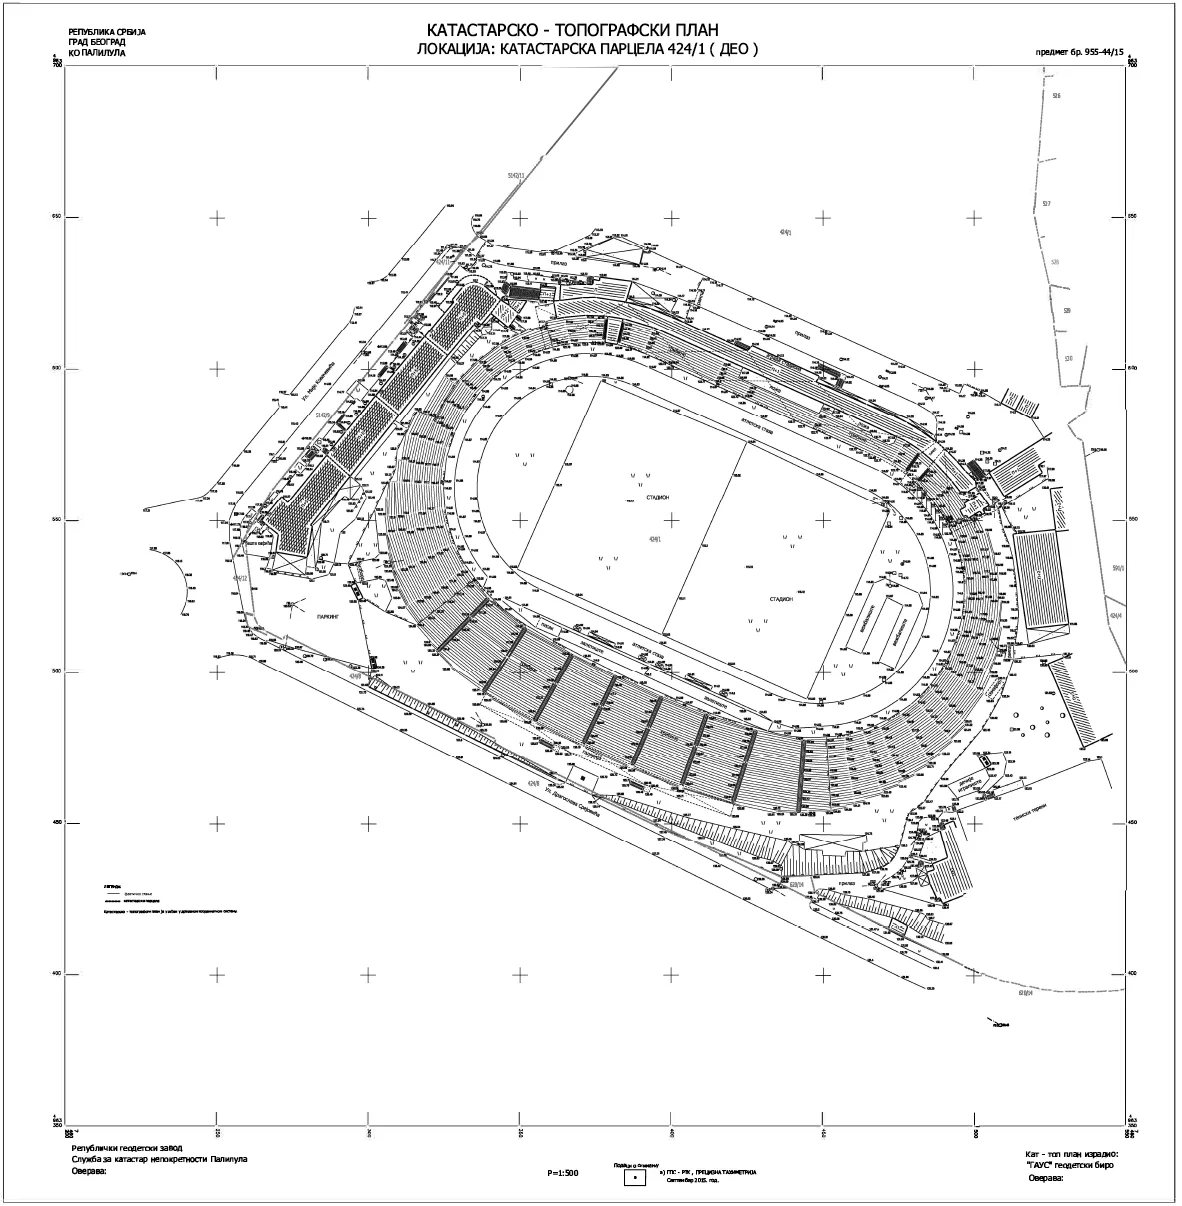 Katastarsko topografski plan Stadion OFK